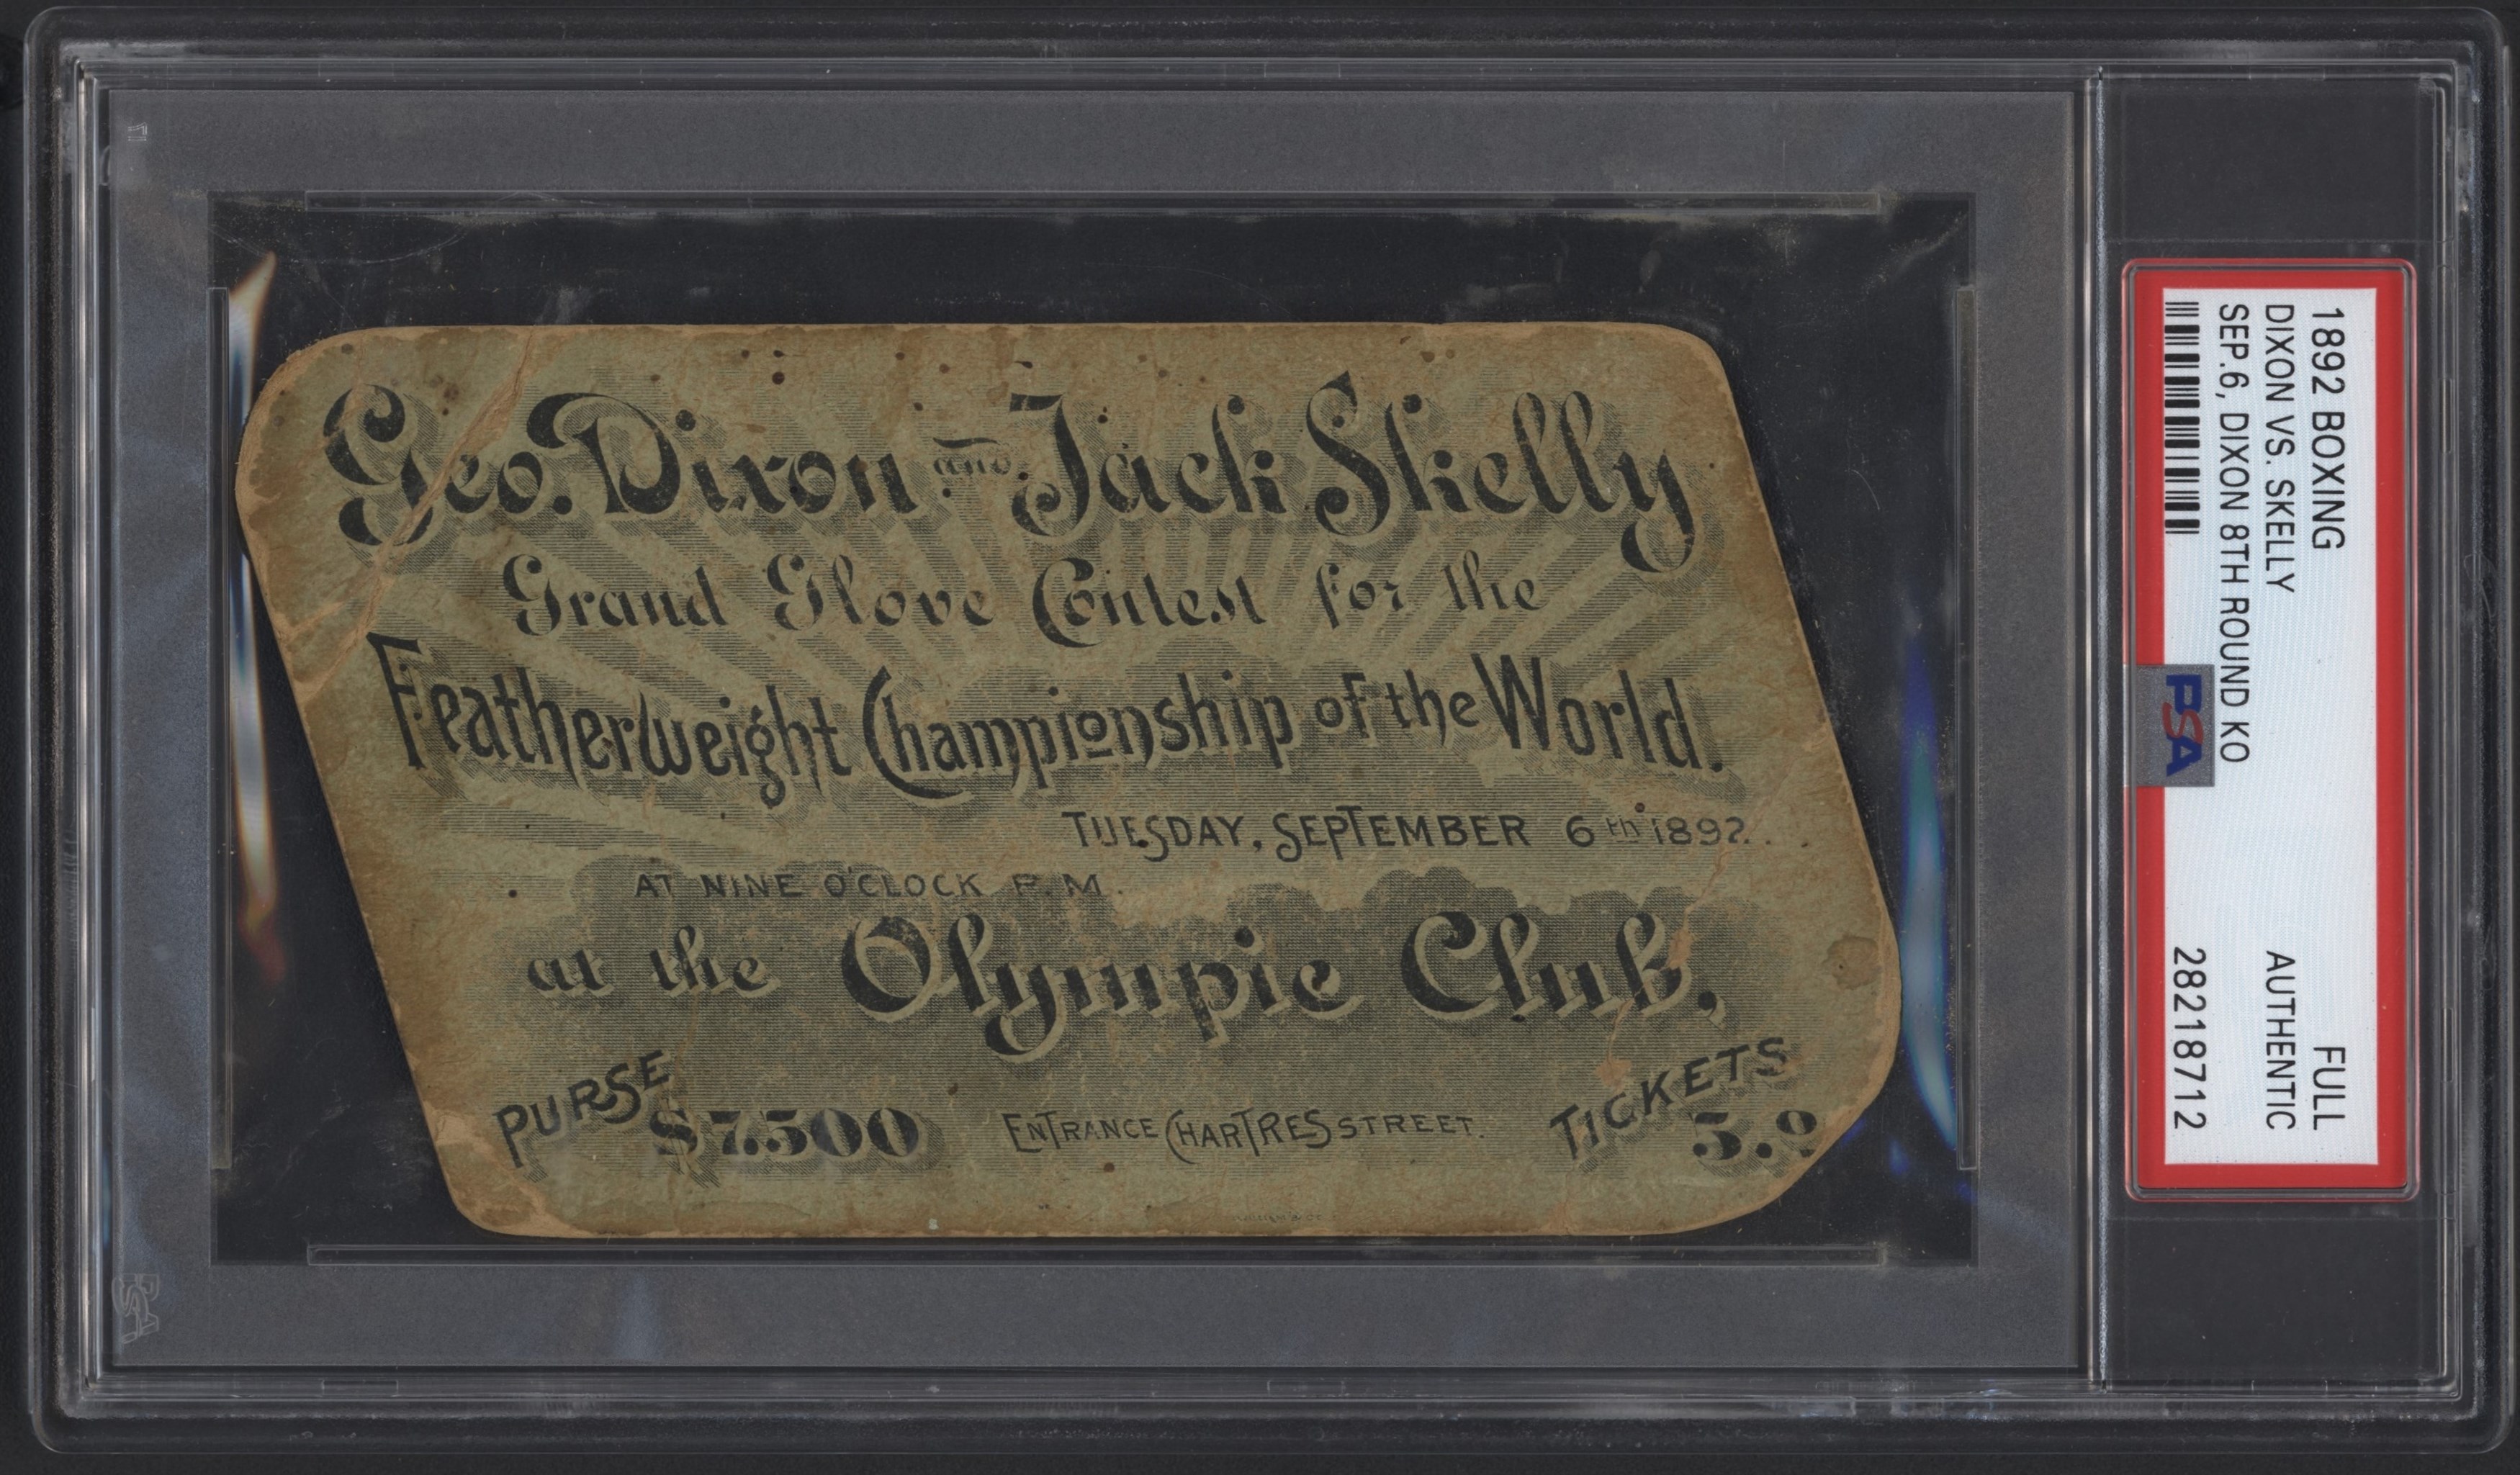 - 1892 George Dixon vs. Jack Skelly Full Ticket